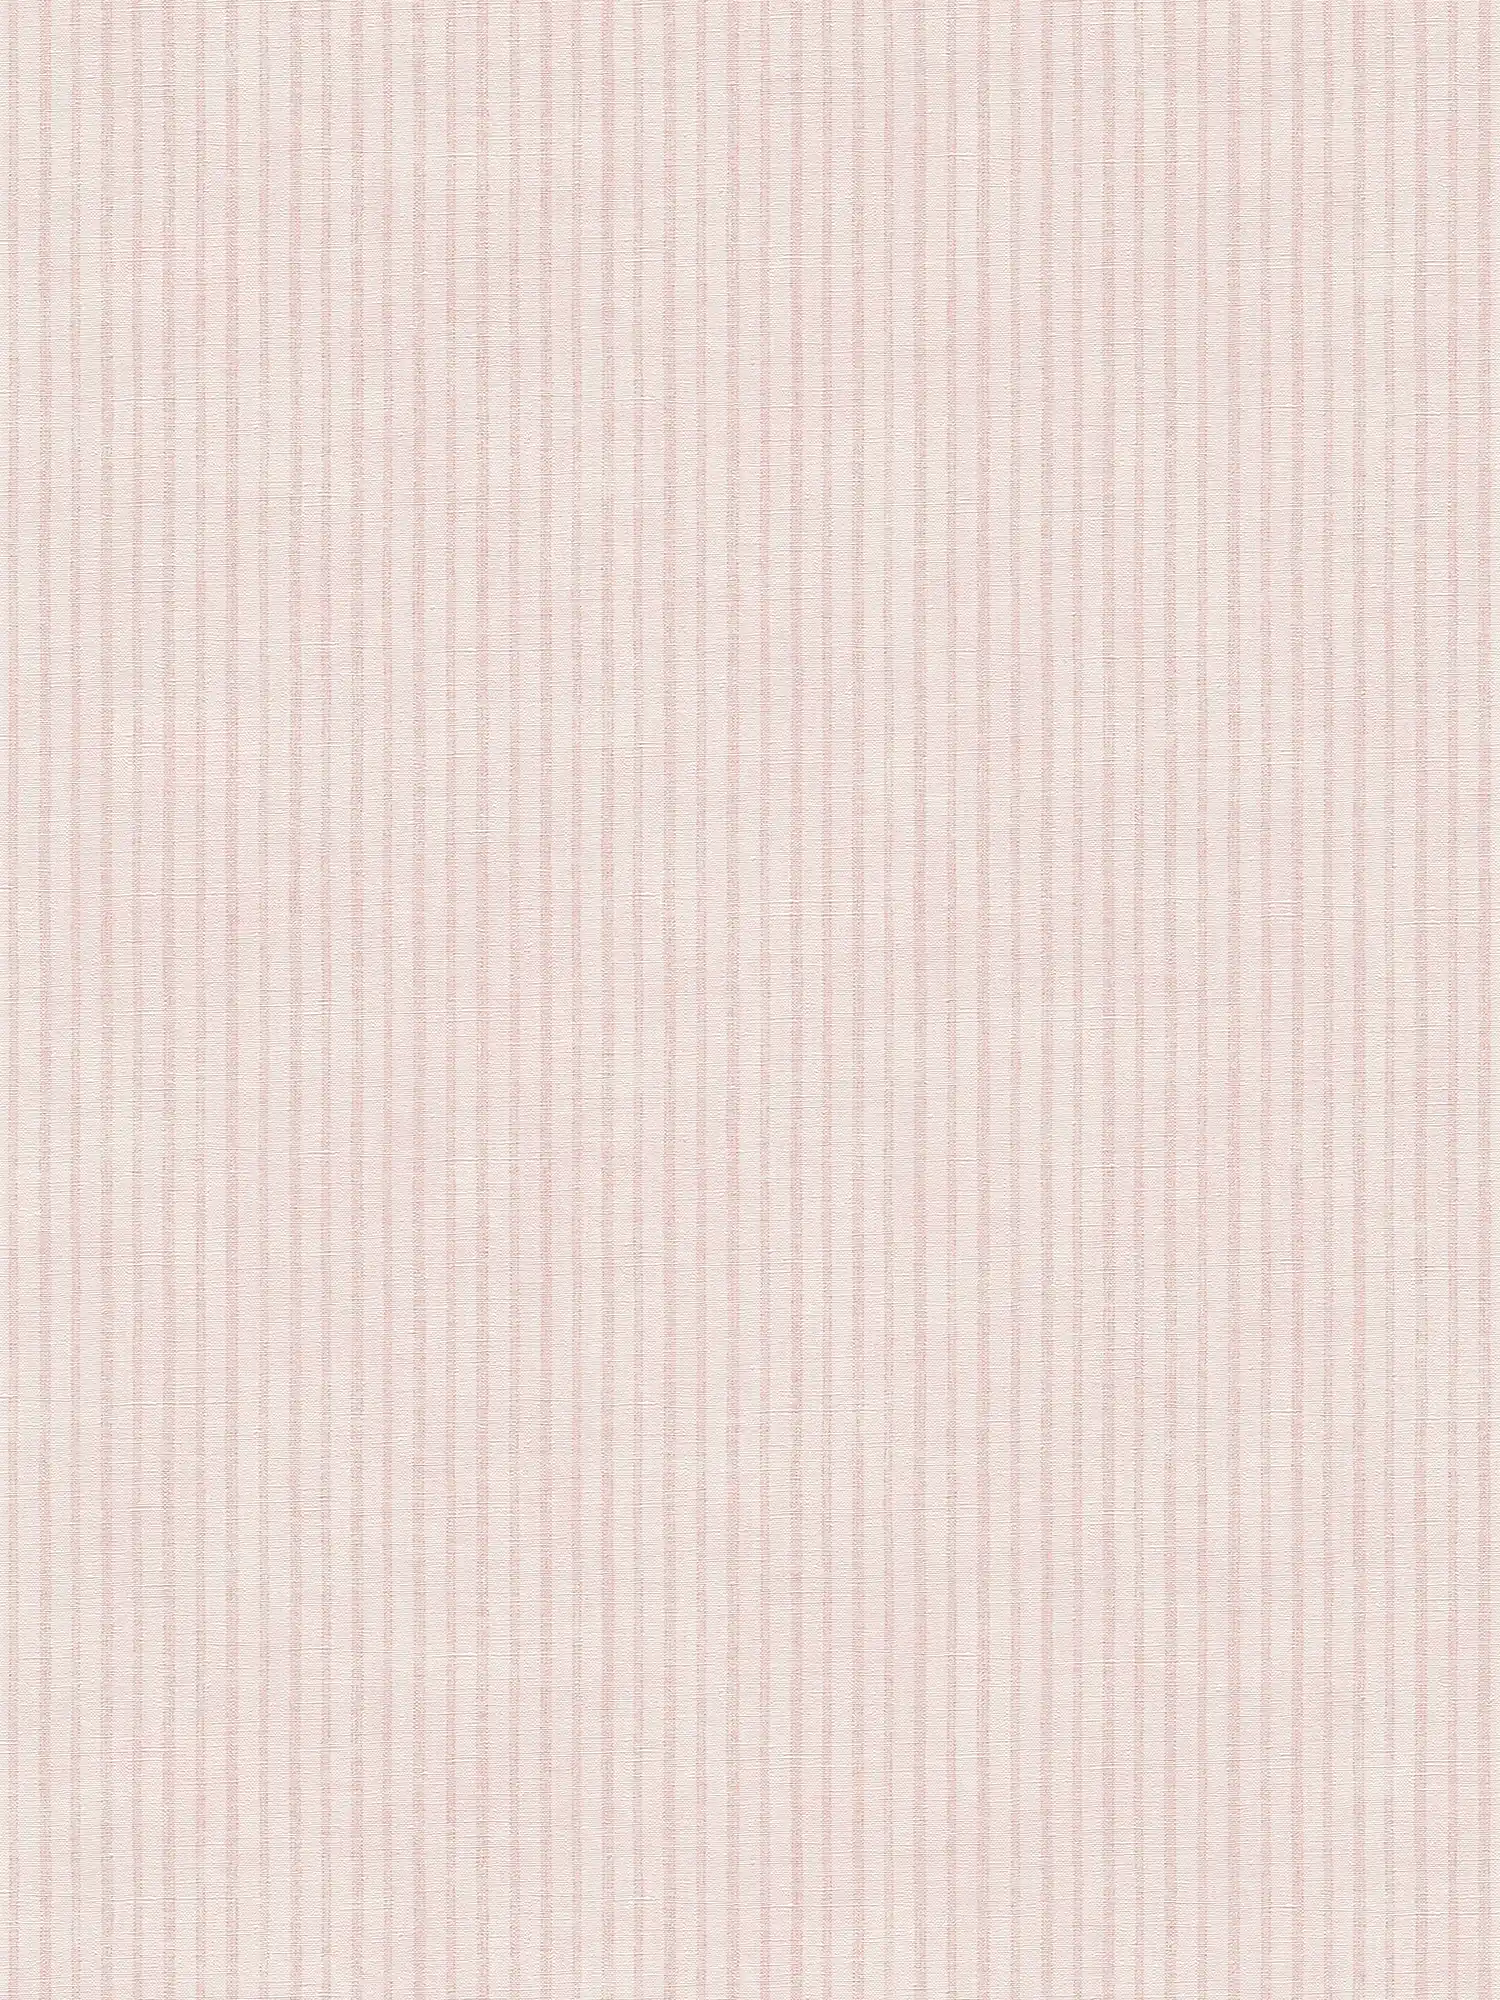 Papel pintado a rayas de estilo rústico - crema, rosa
